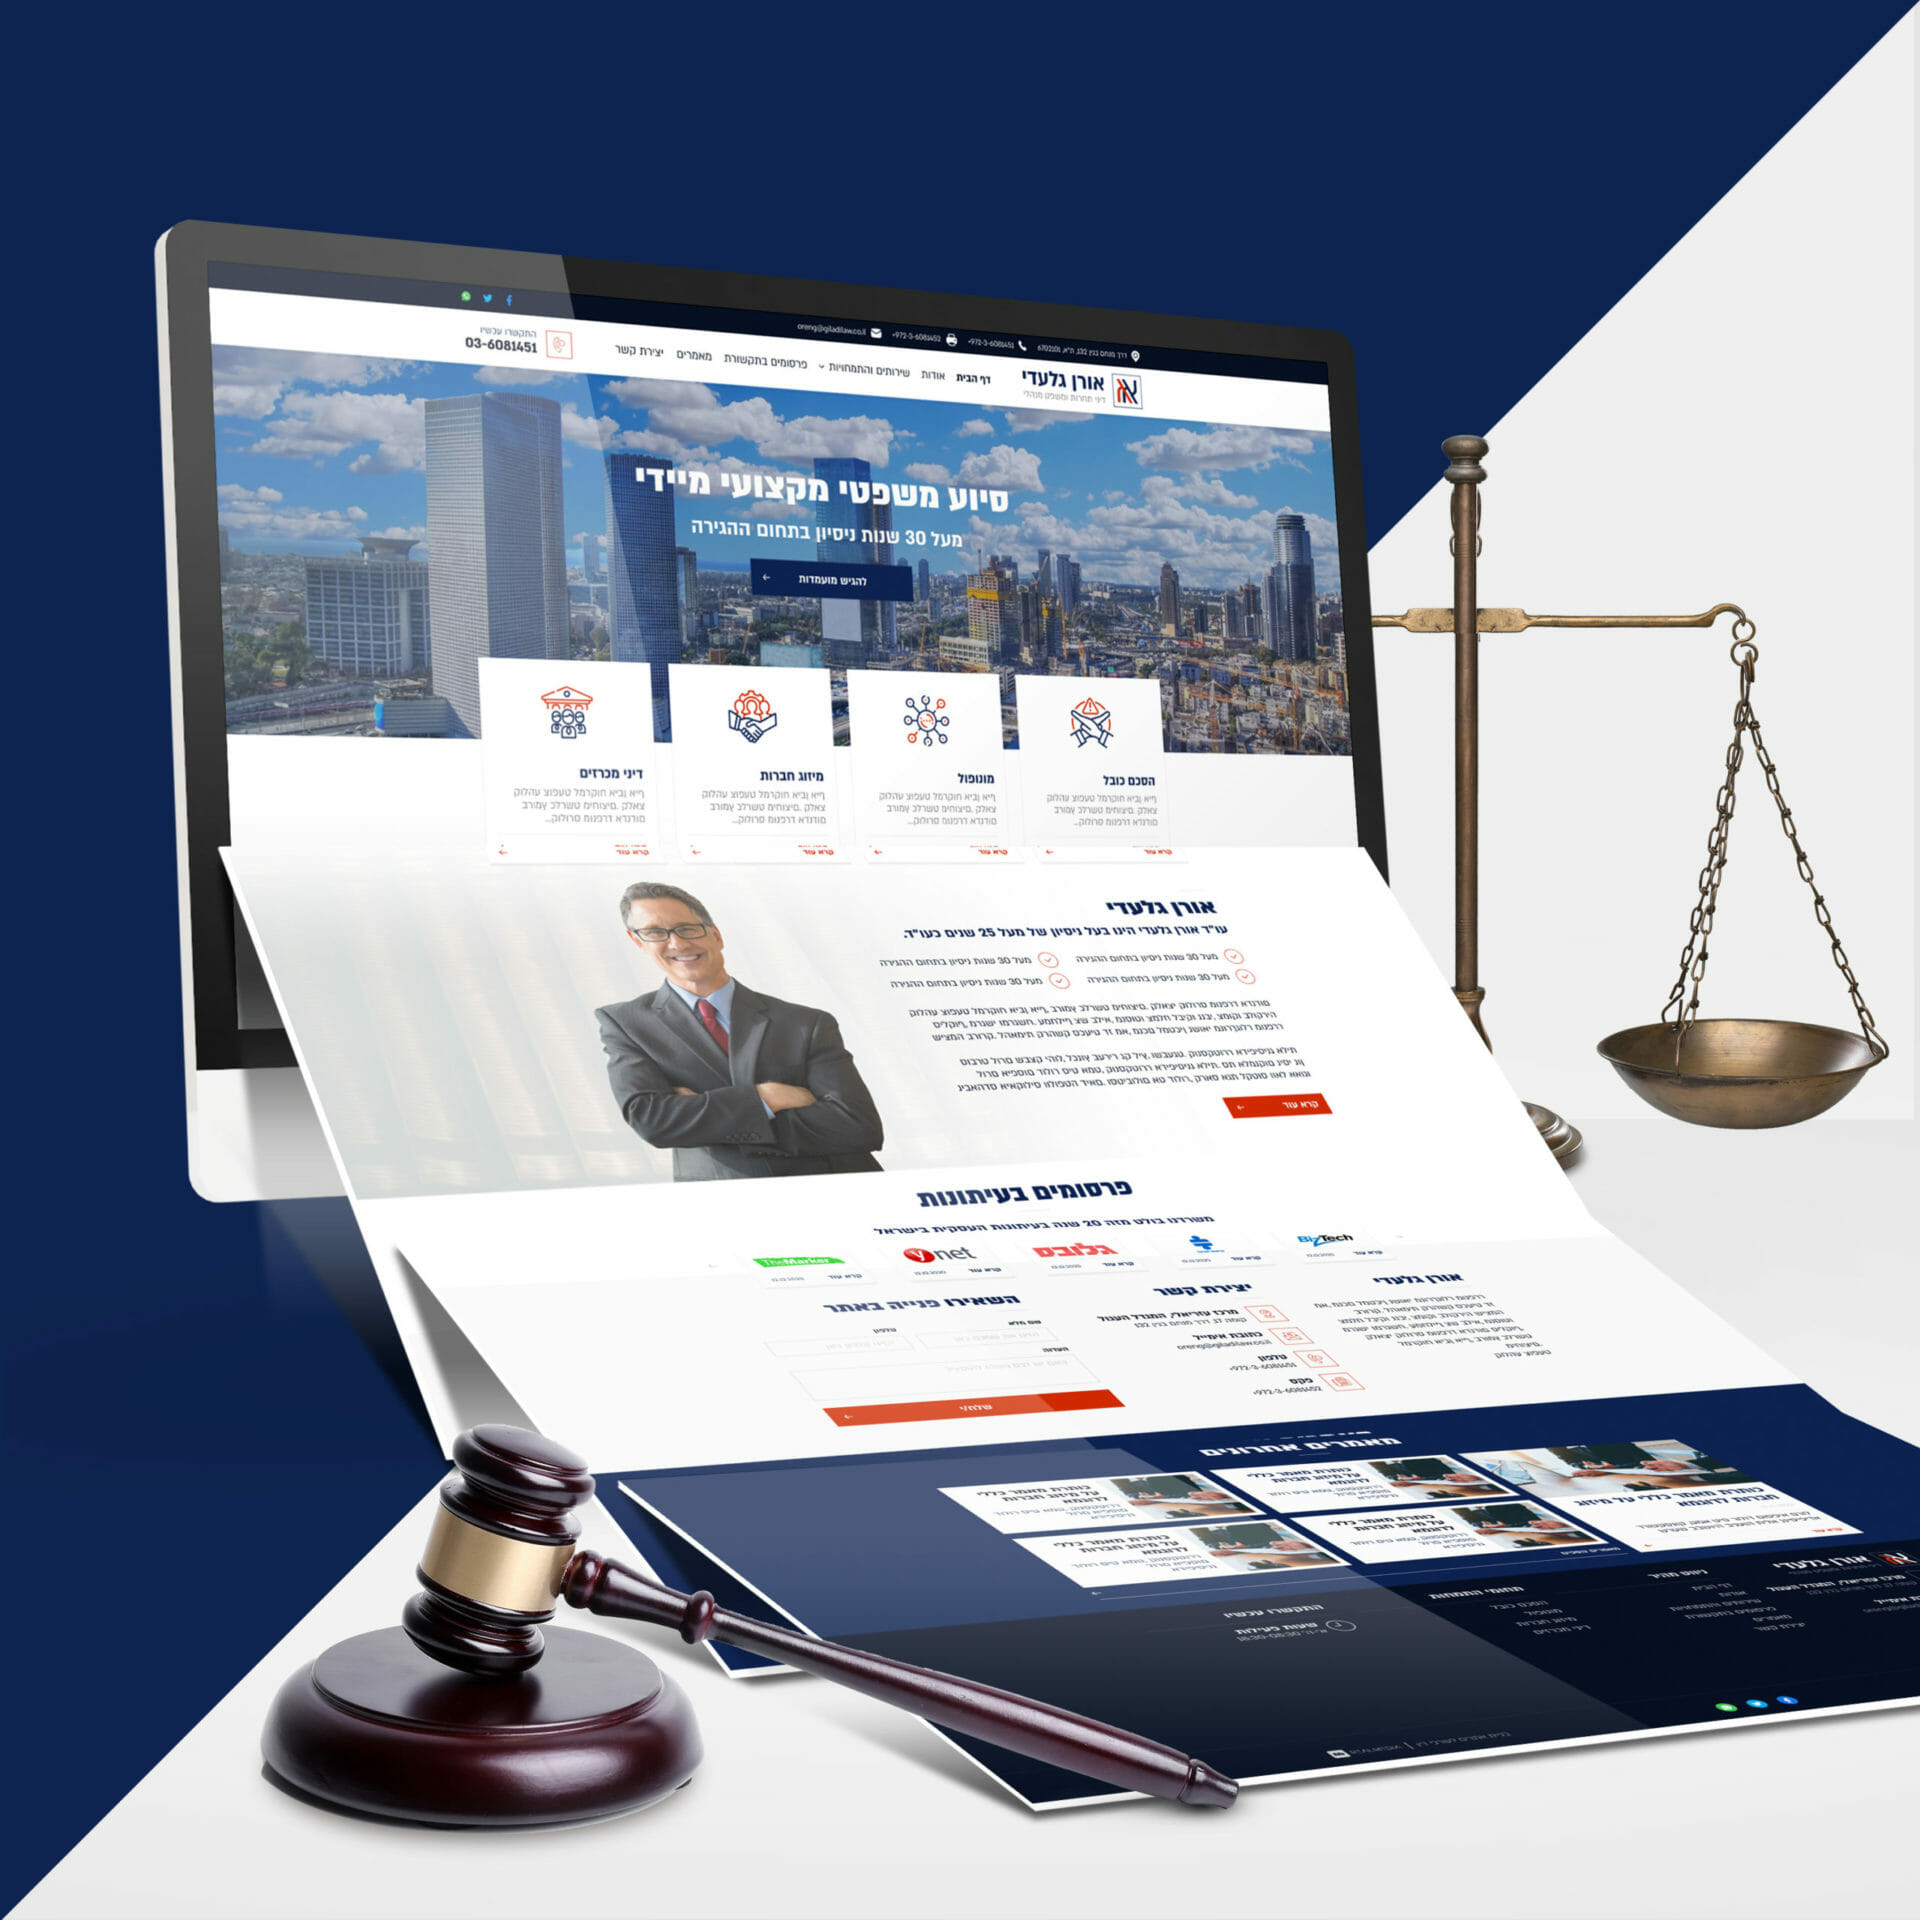 בניית אתר לעורך דין - אורן גלעדי